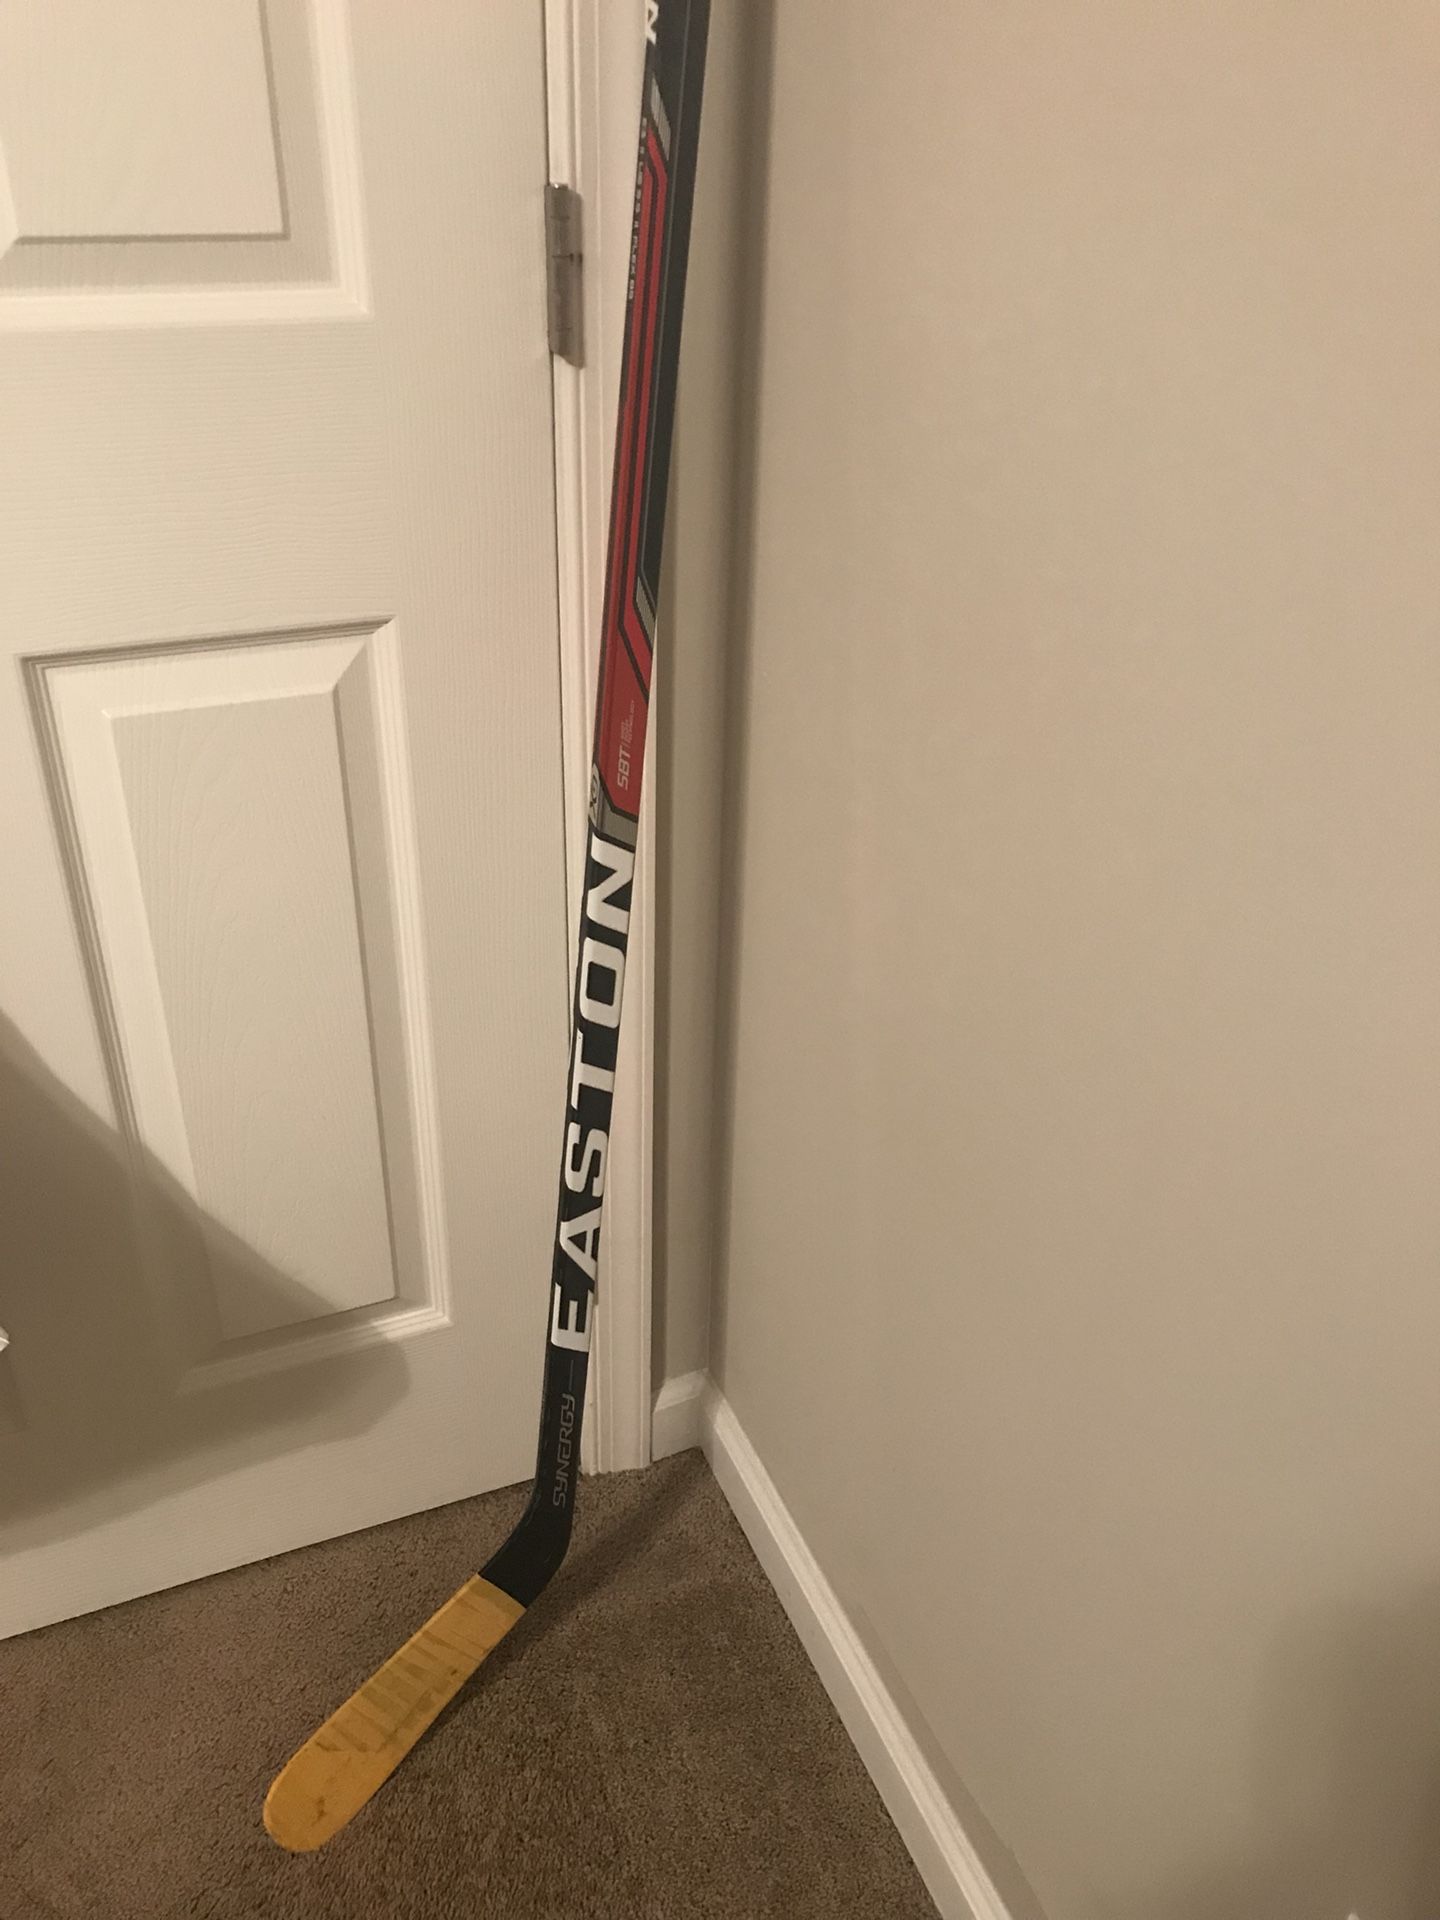 Easton synergy GX Hockey stick for Sale in Bensalem, PA - OfferUp